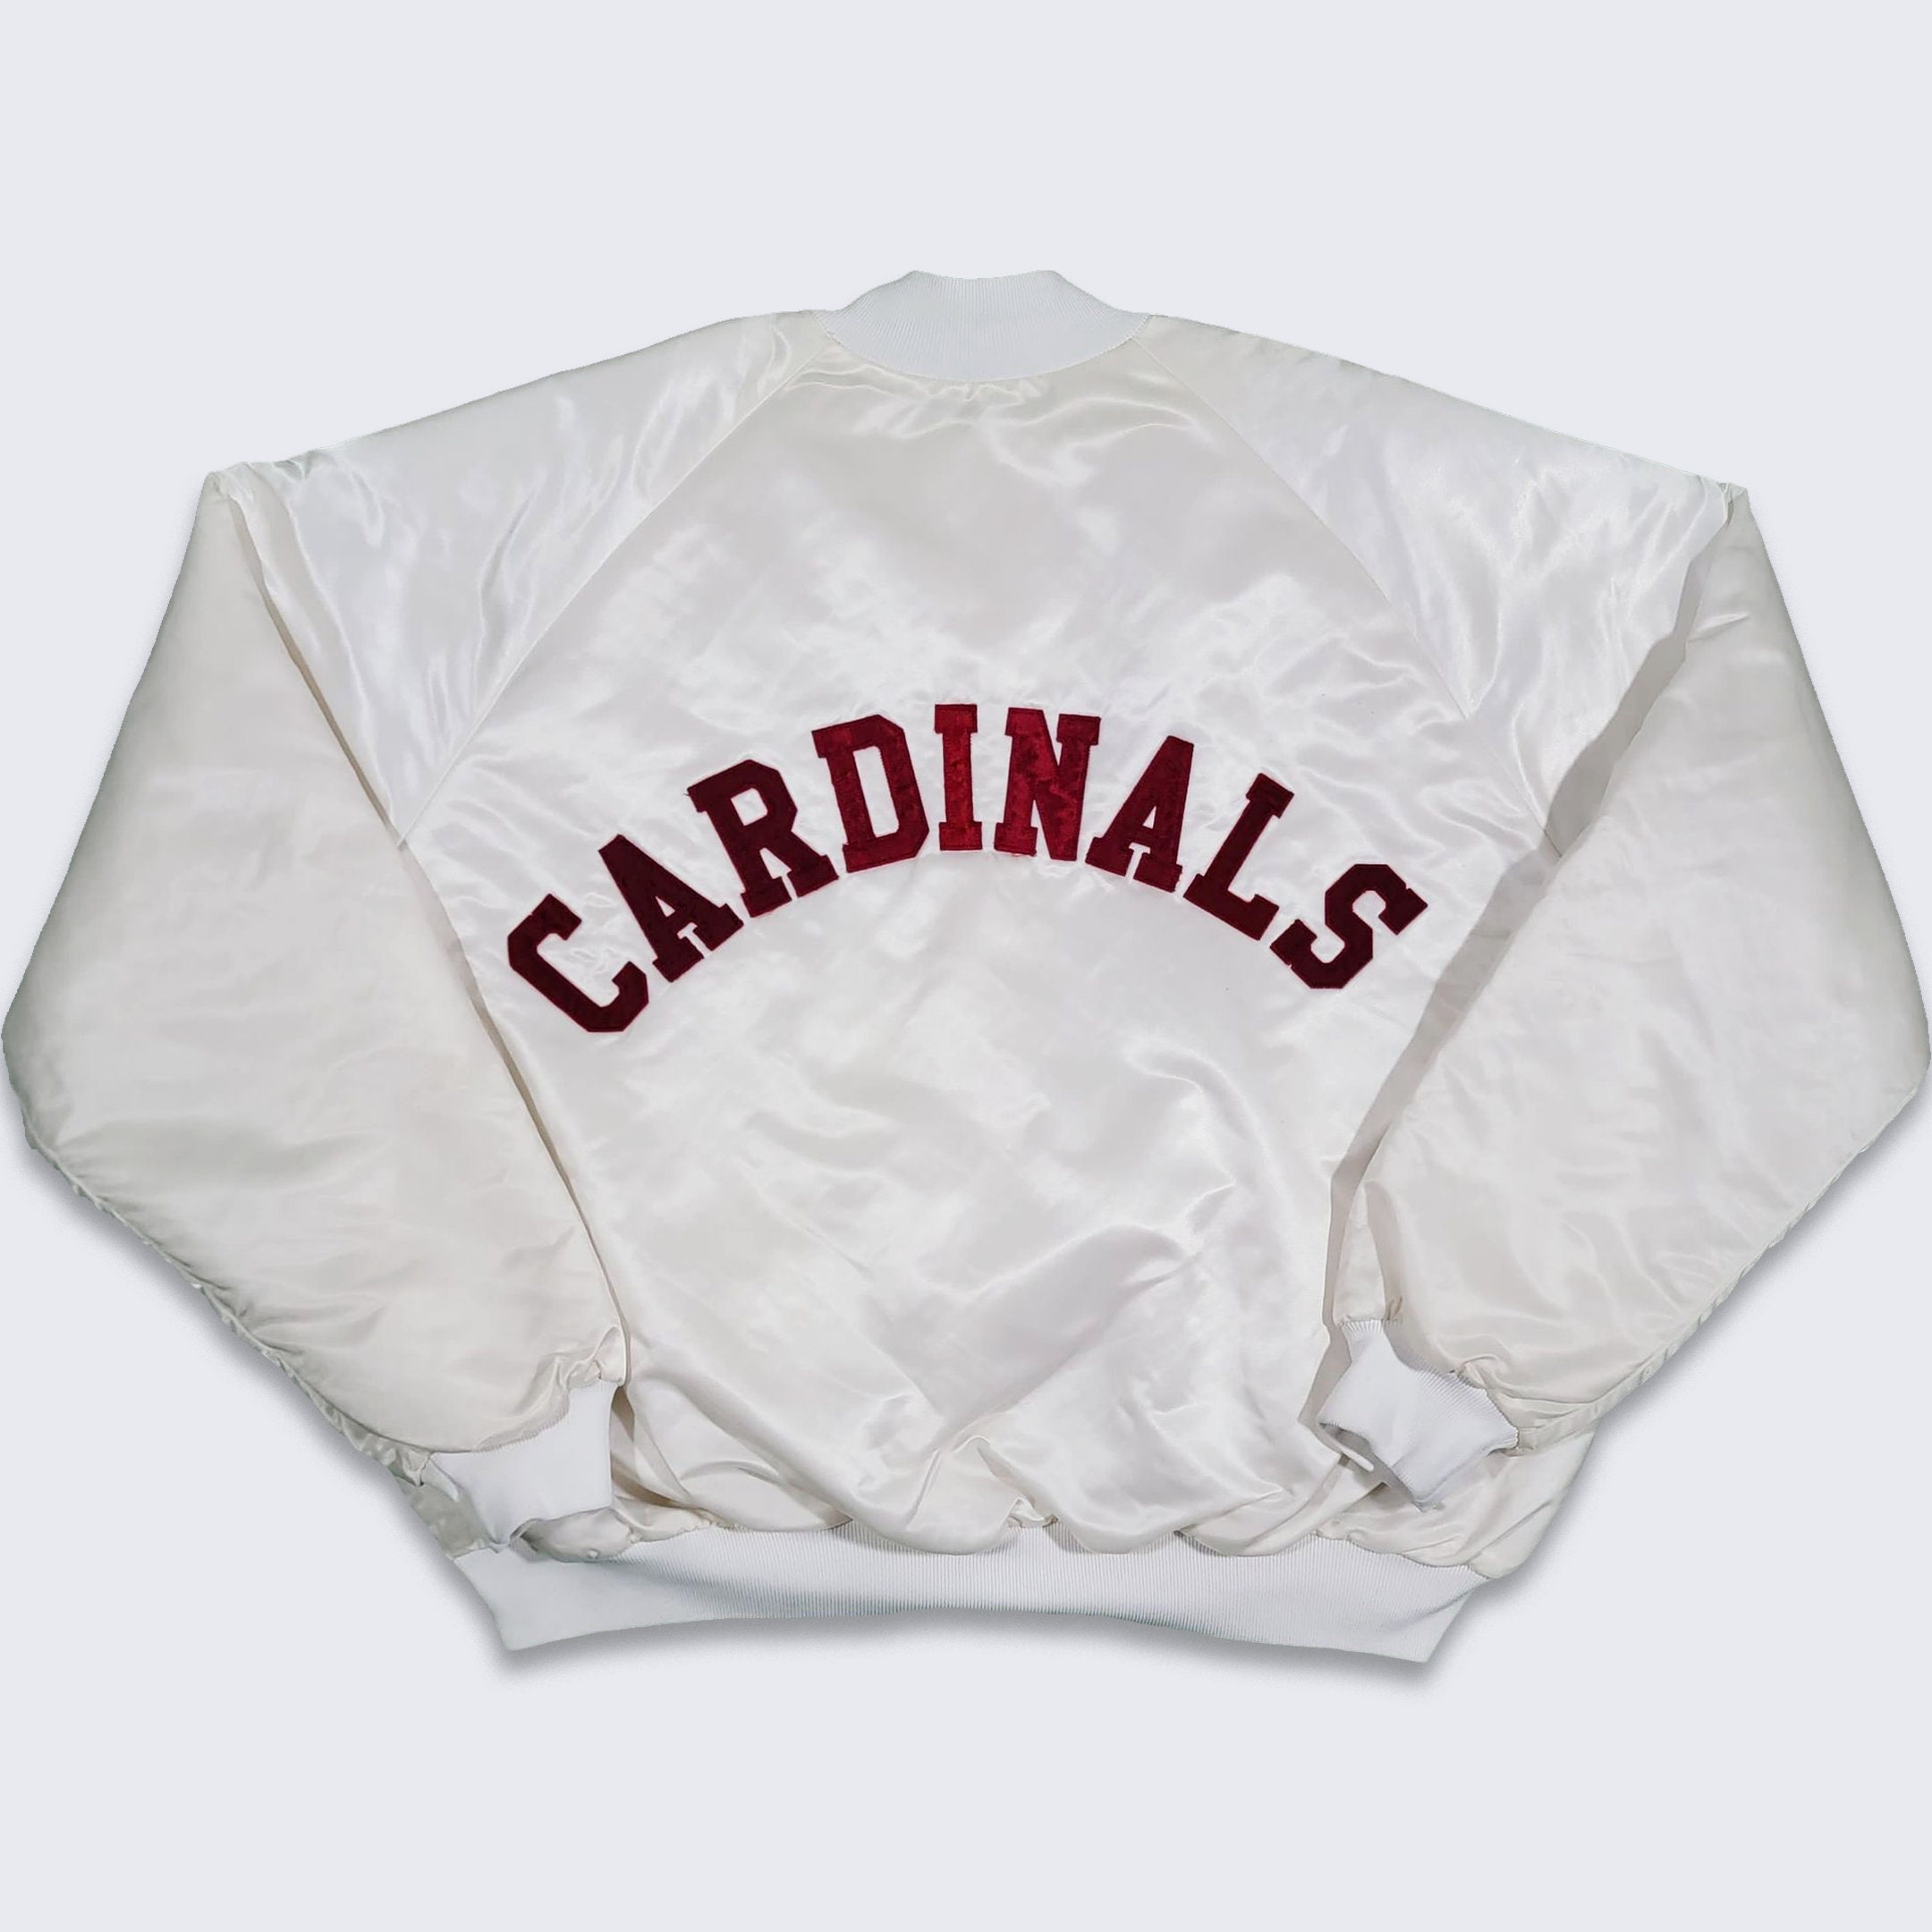 Starter Satin 80's University of Louisville Cardinals Black Jacket - Jackets  Masters